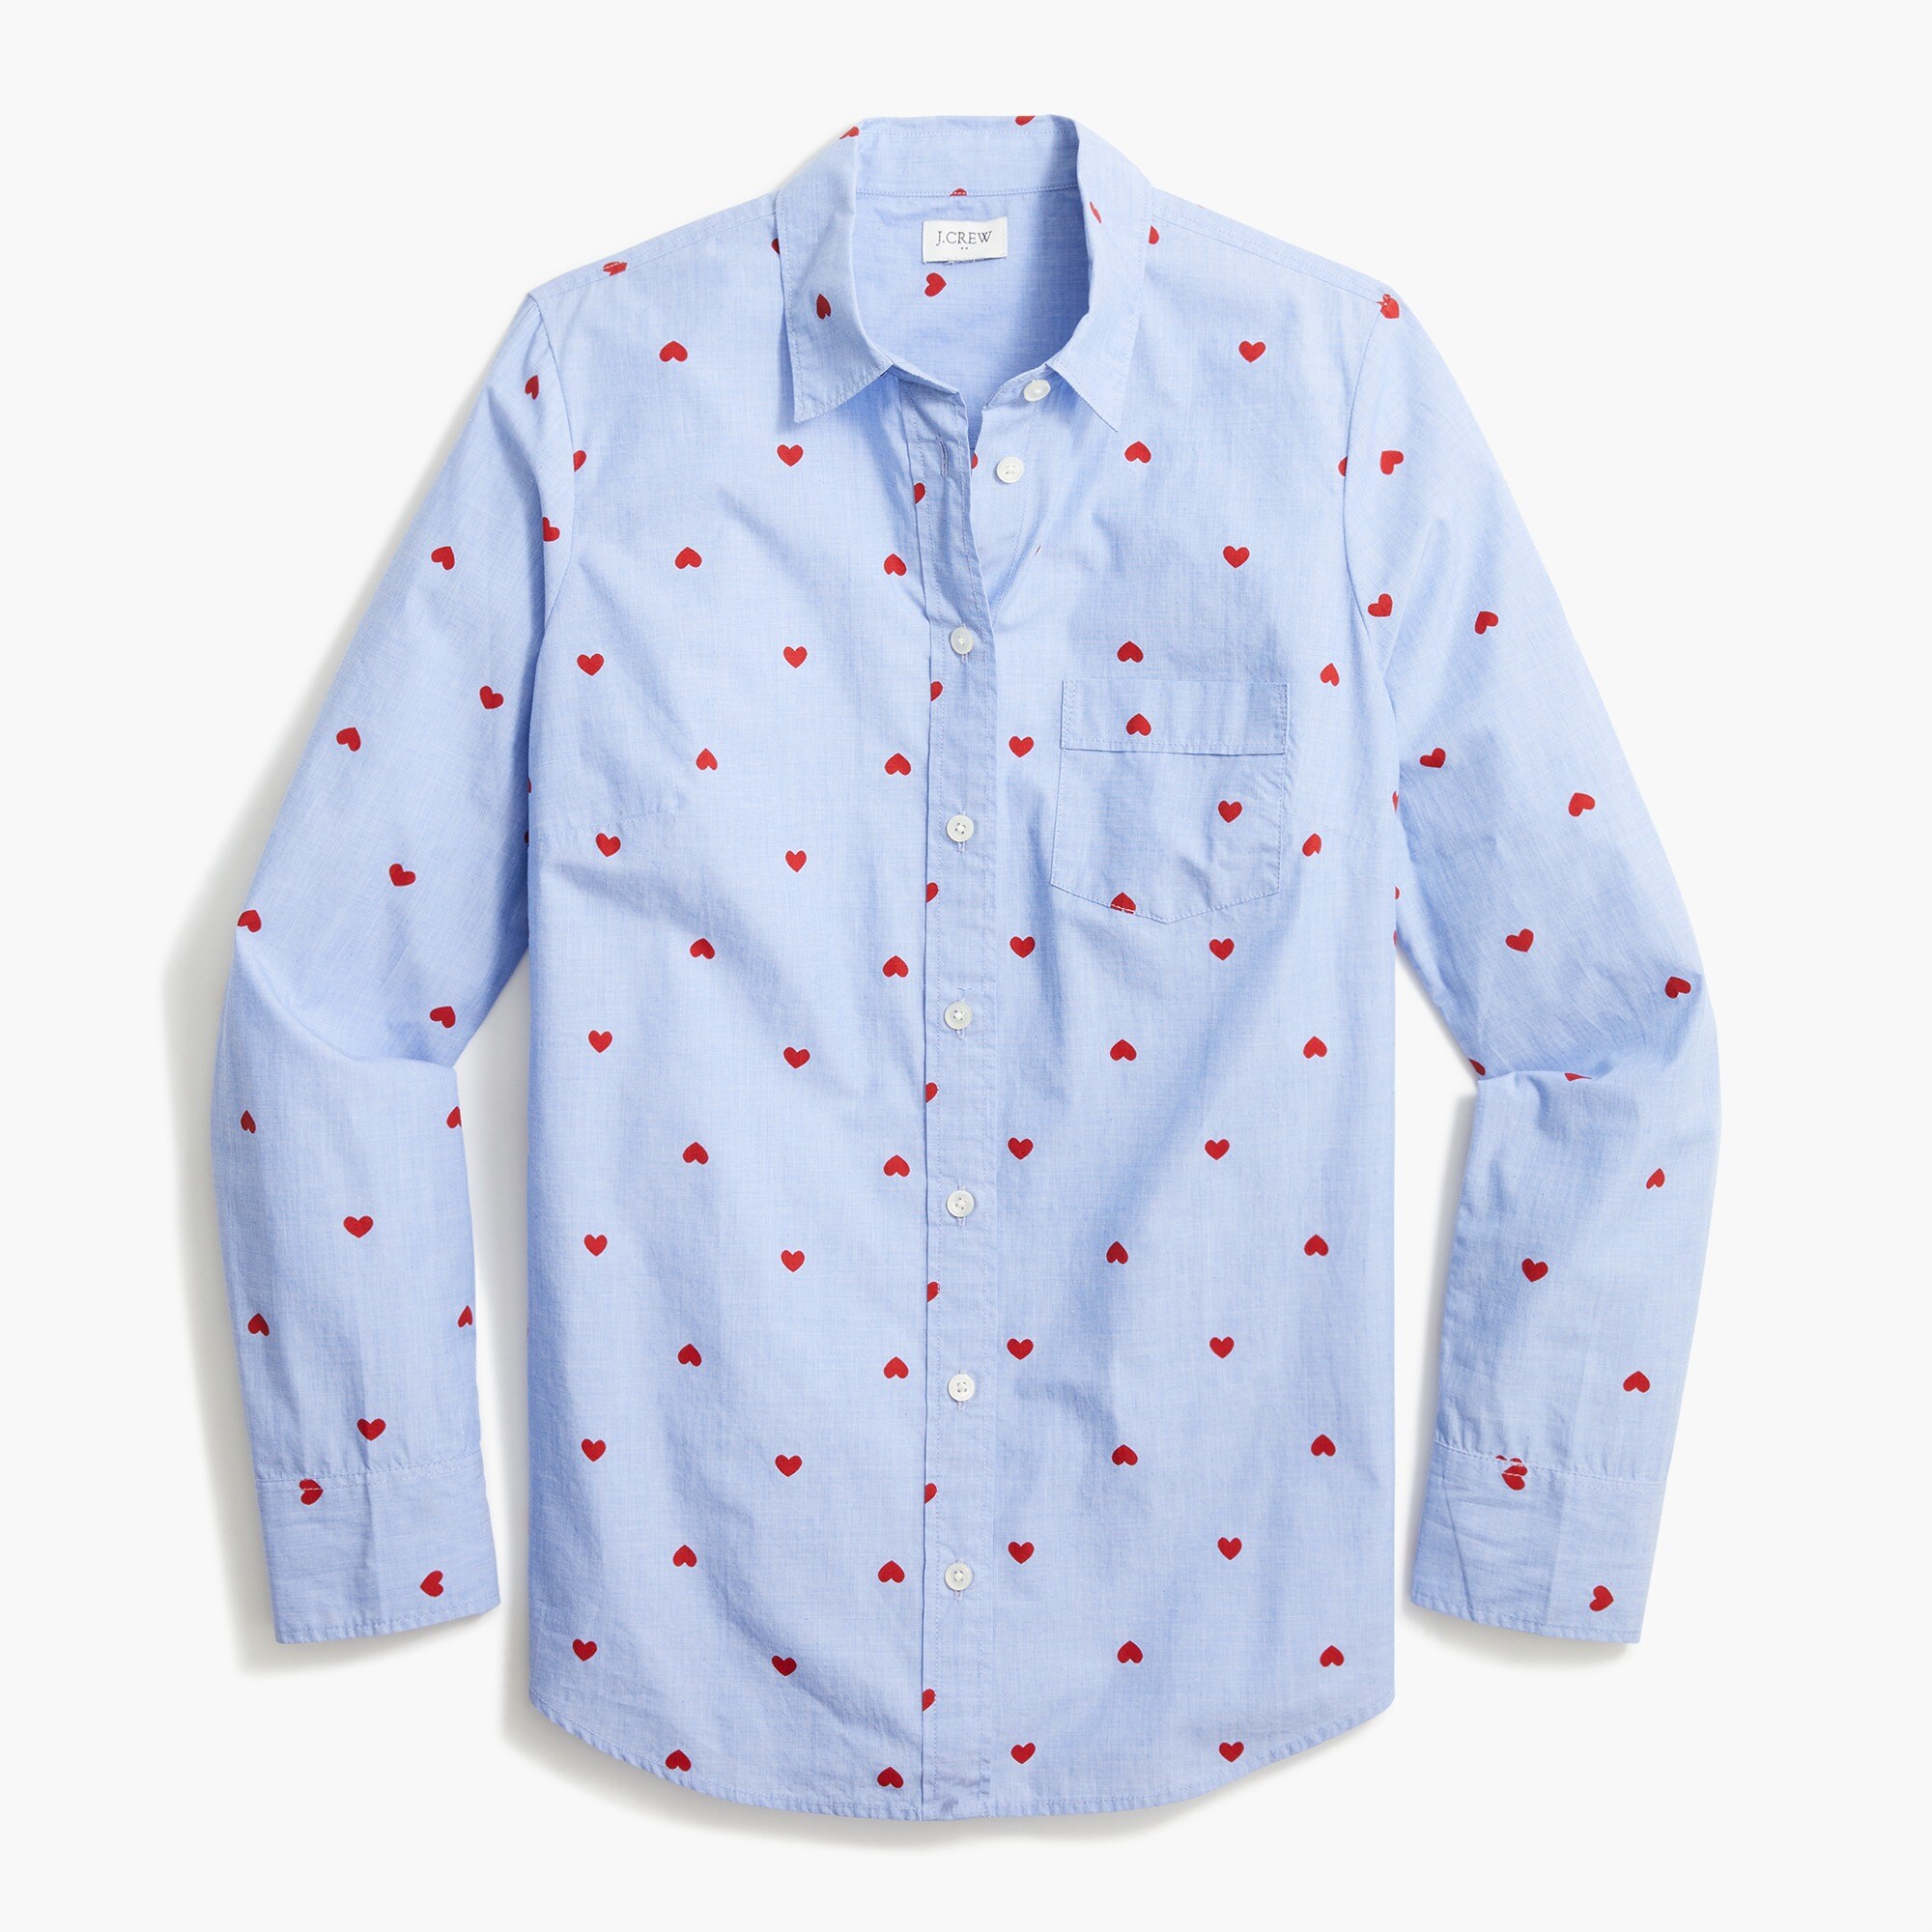  Petite heart cotton poplin shirt in signature fit